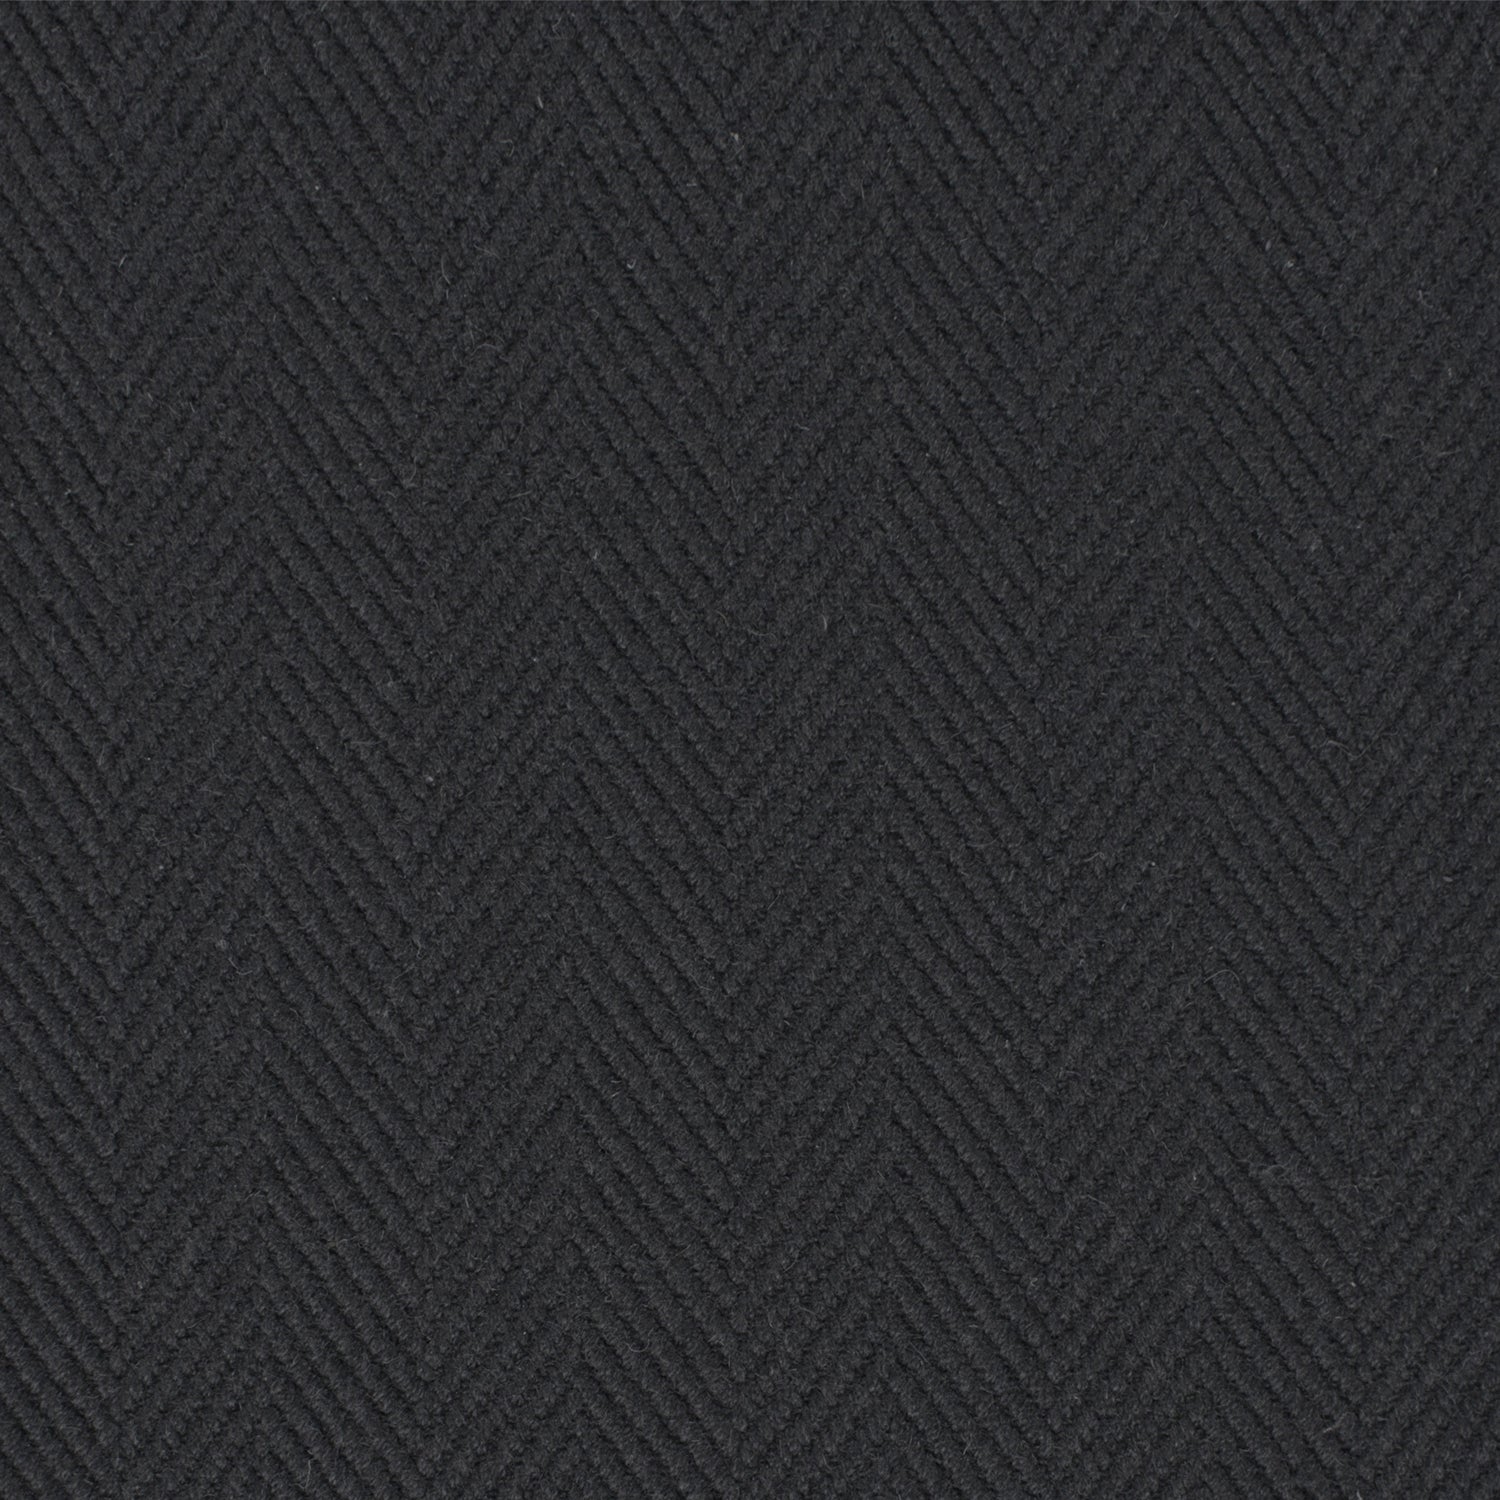 Wool broadloom carpet swatch in a herringbone weave in charcoal.